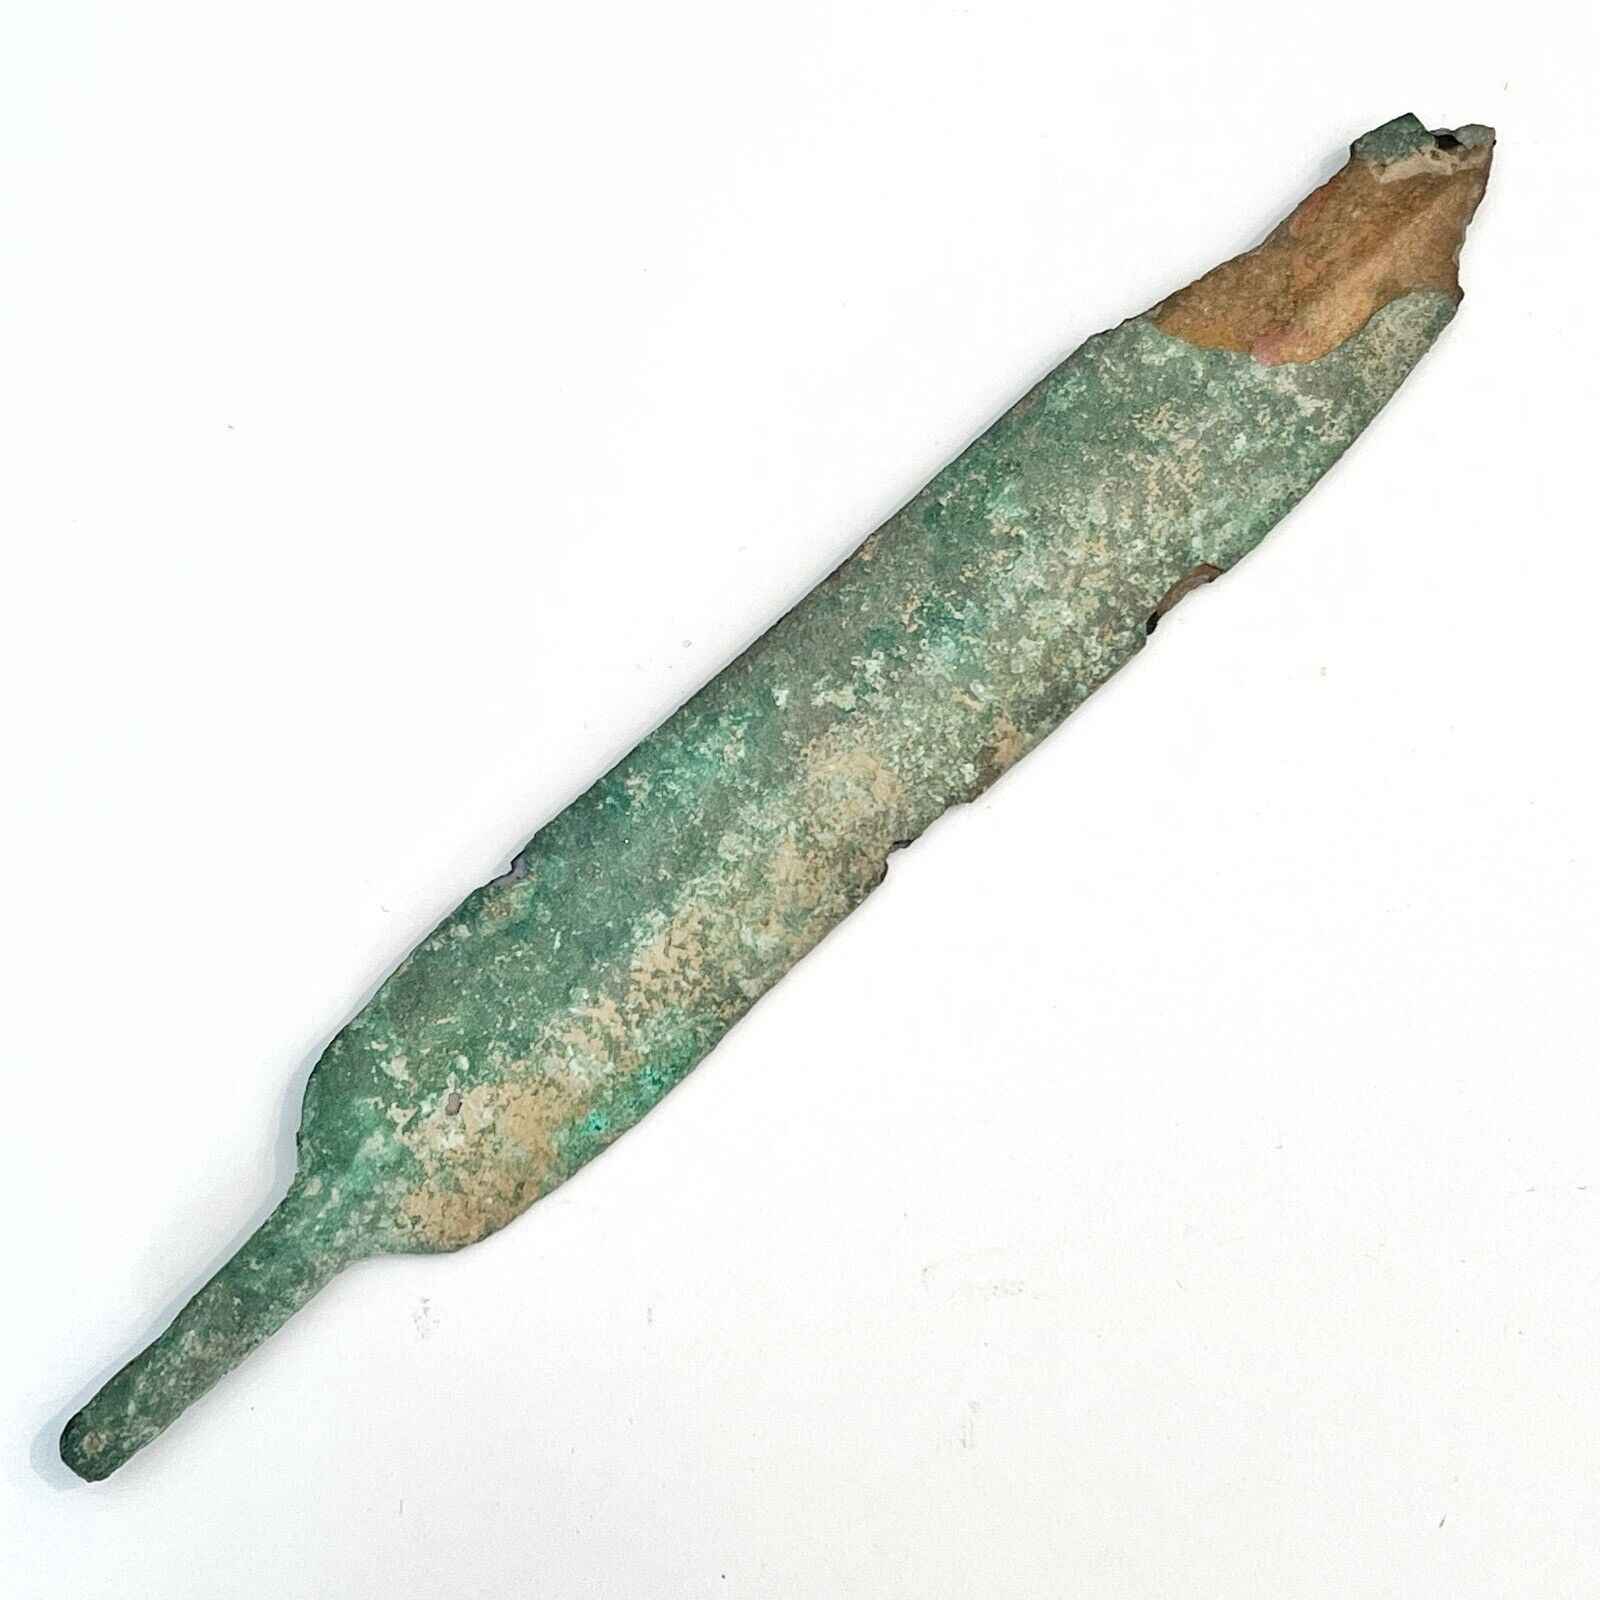 6” Ancient Luristan Bronze Spear Head Artifact Weapon Antiquity Circa 1000 BCE